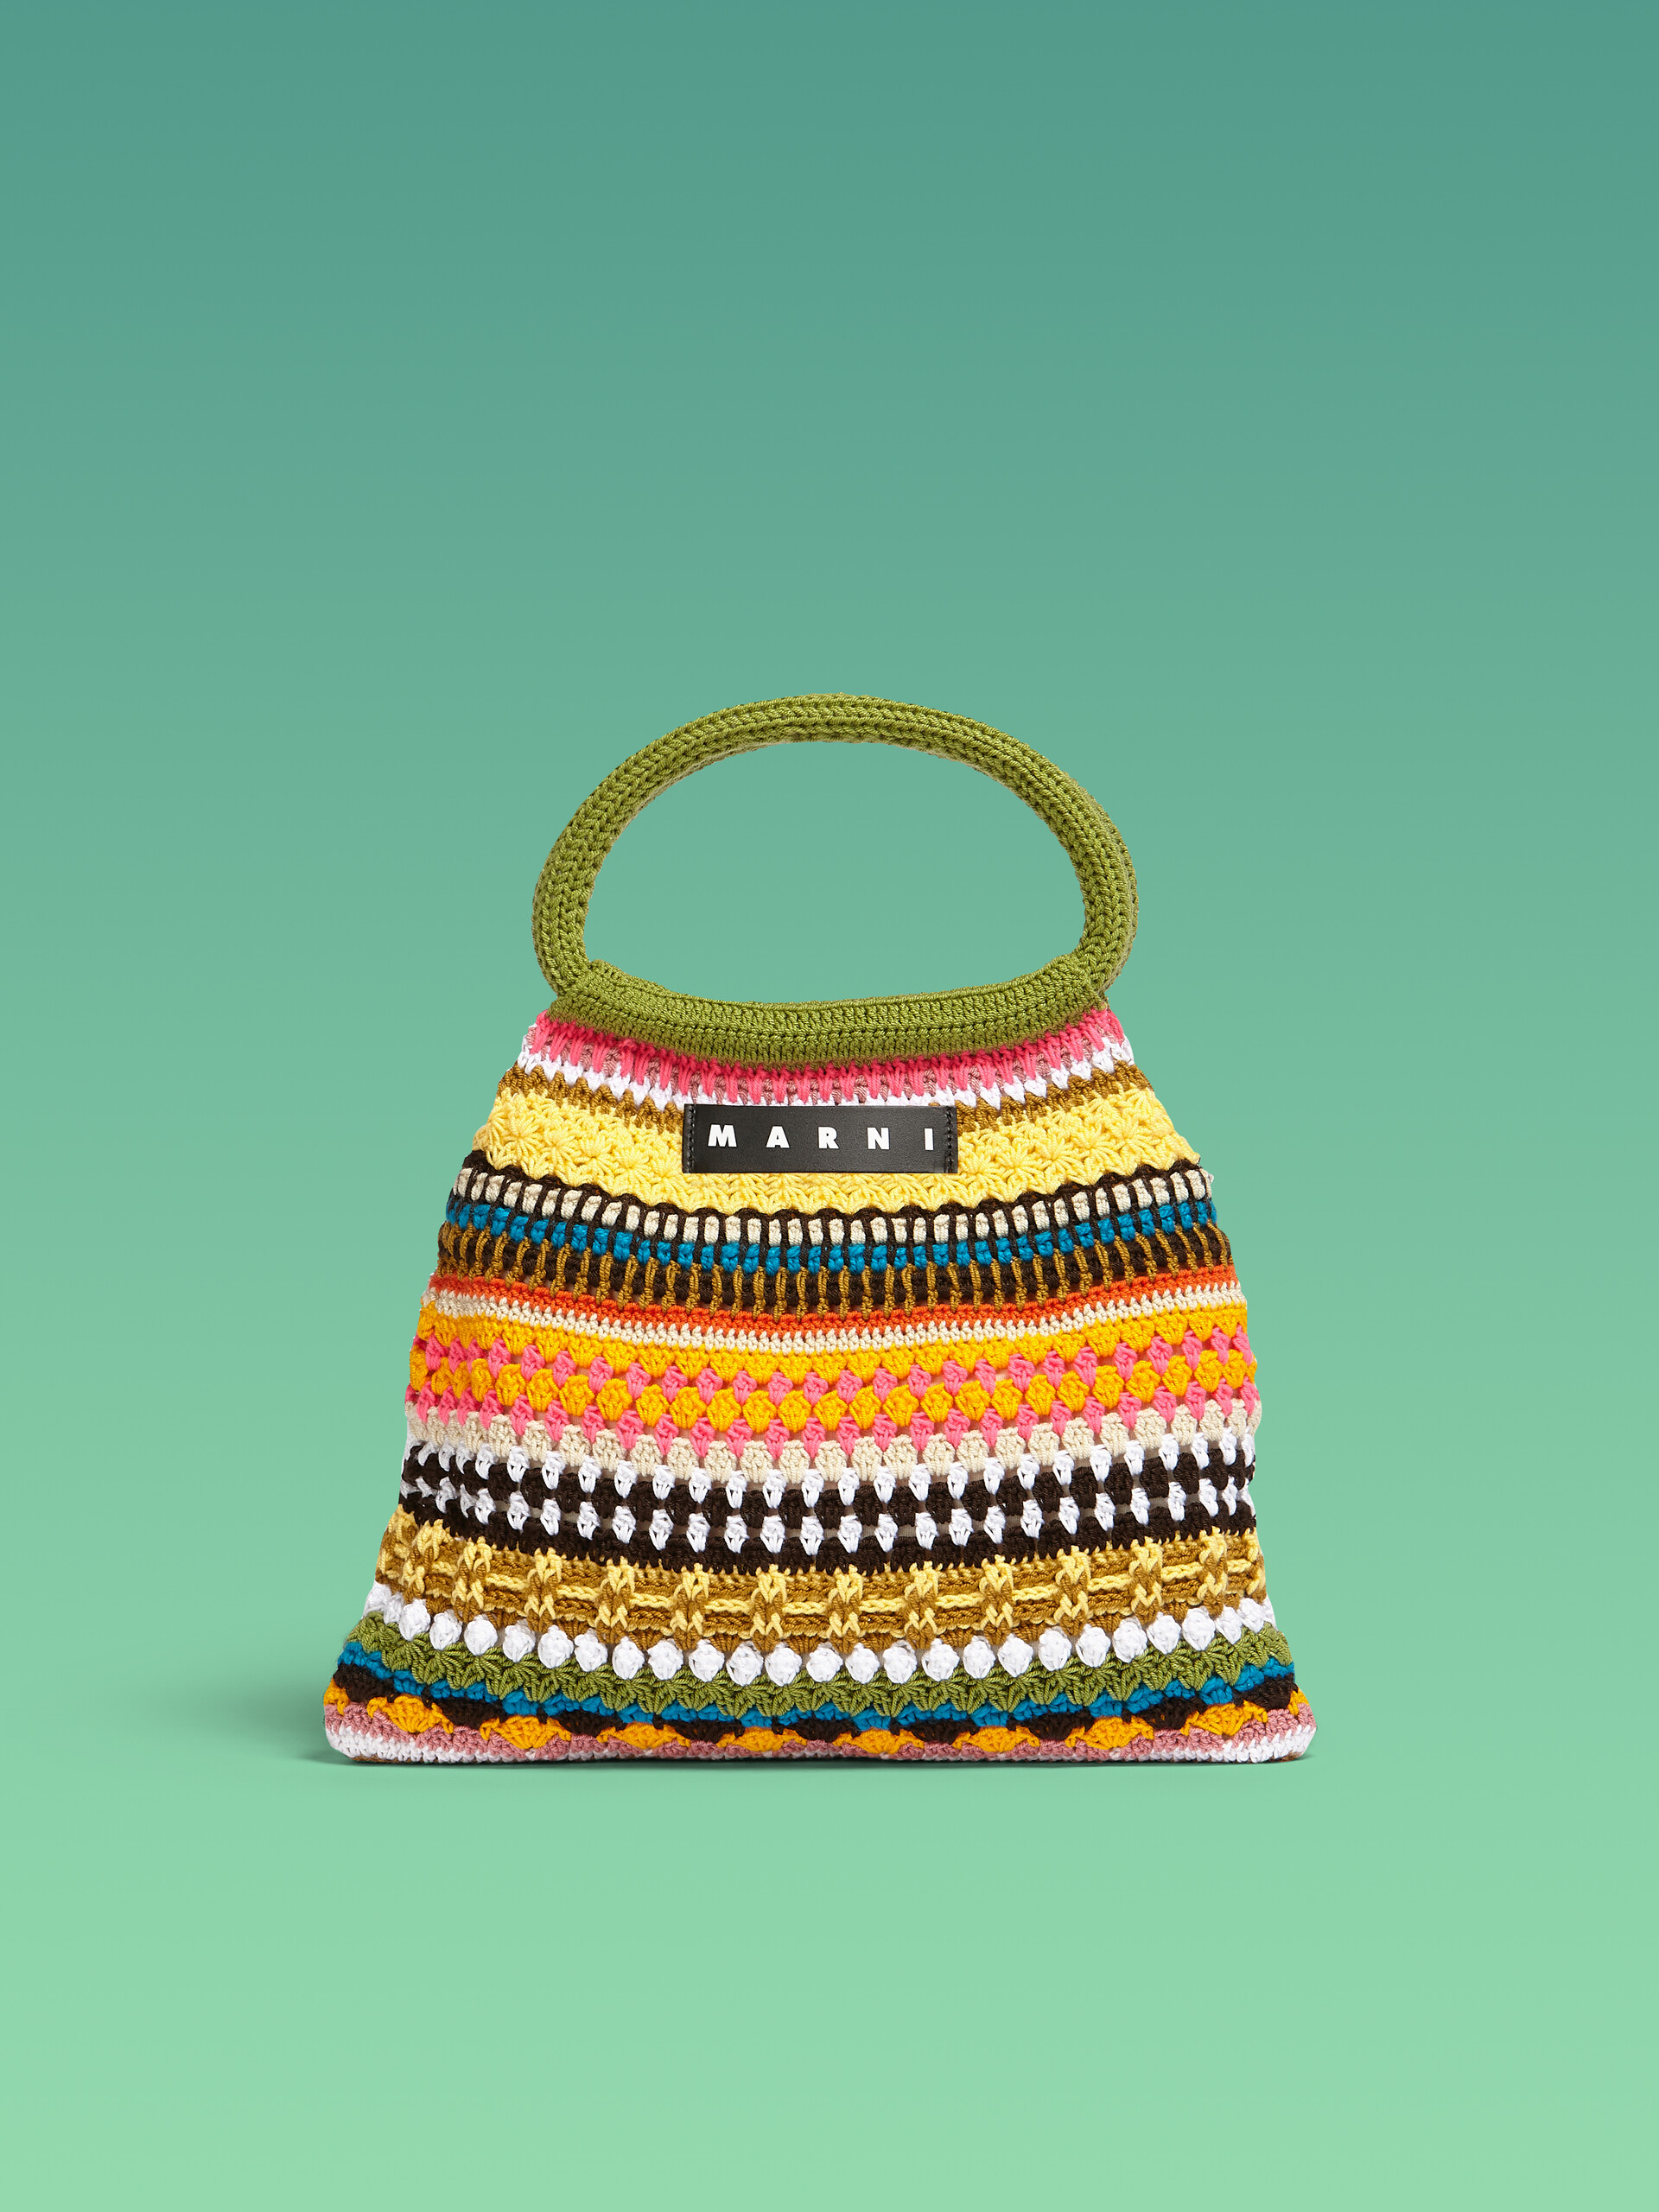 MARNI MARKET bag in green crochet - Furniture - Image 1